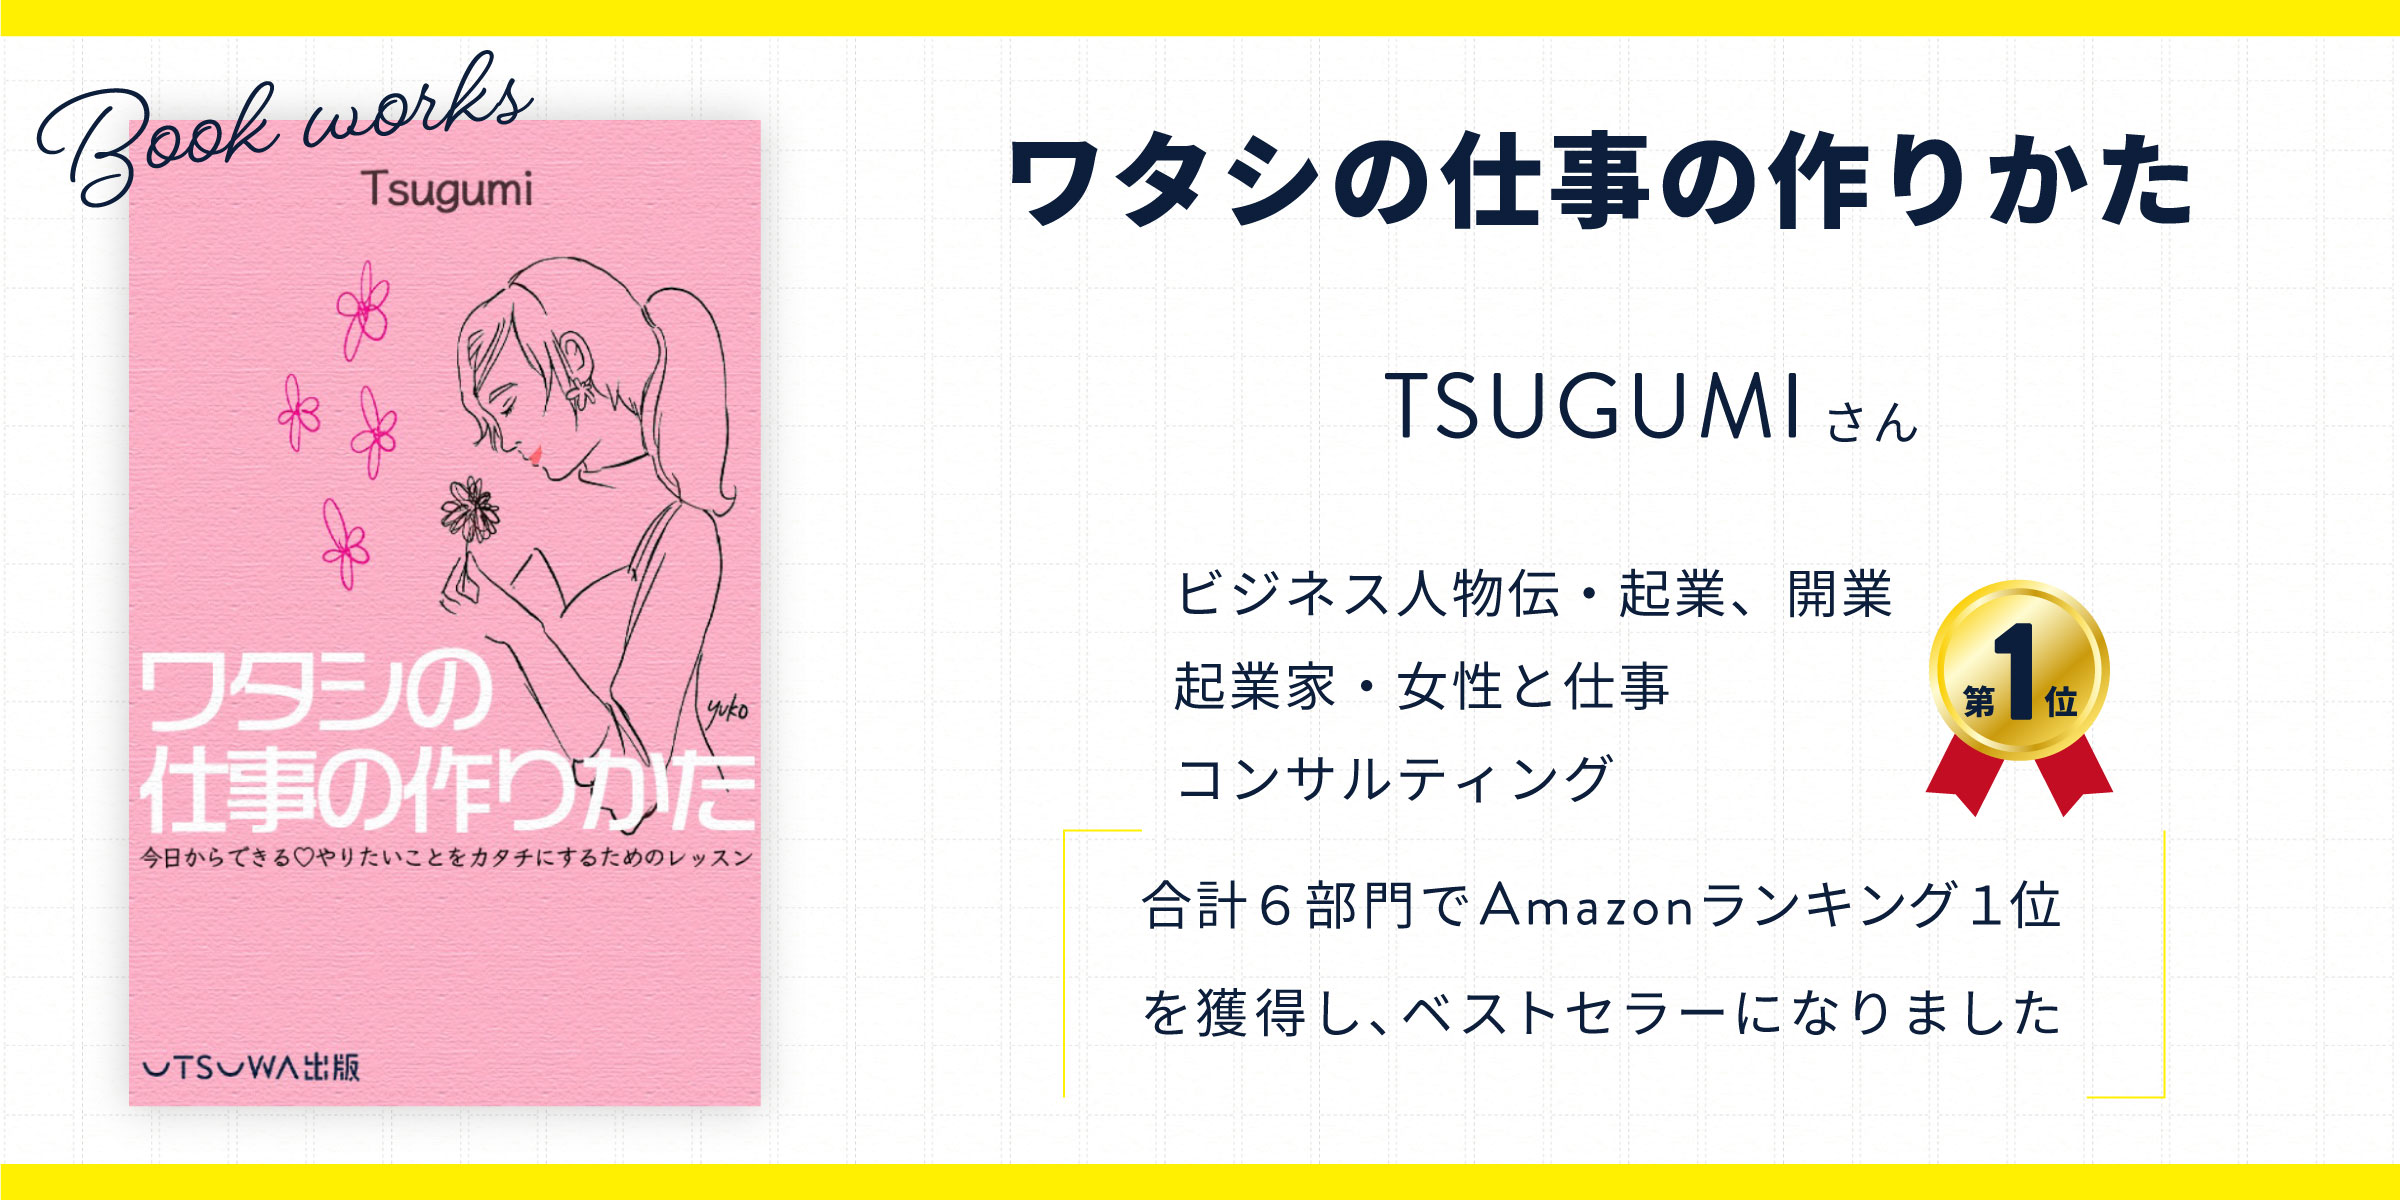 「TSUGUMI」さんが本を出版されました